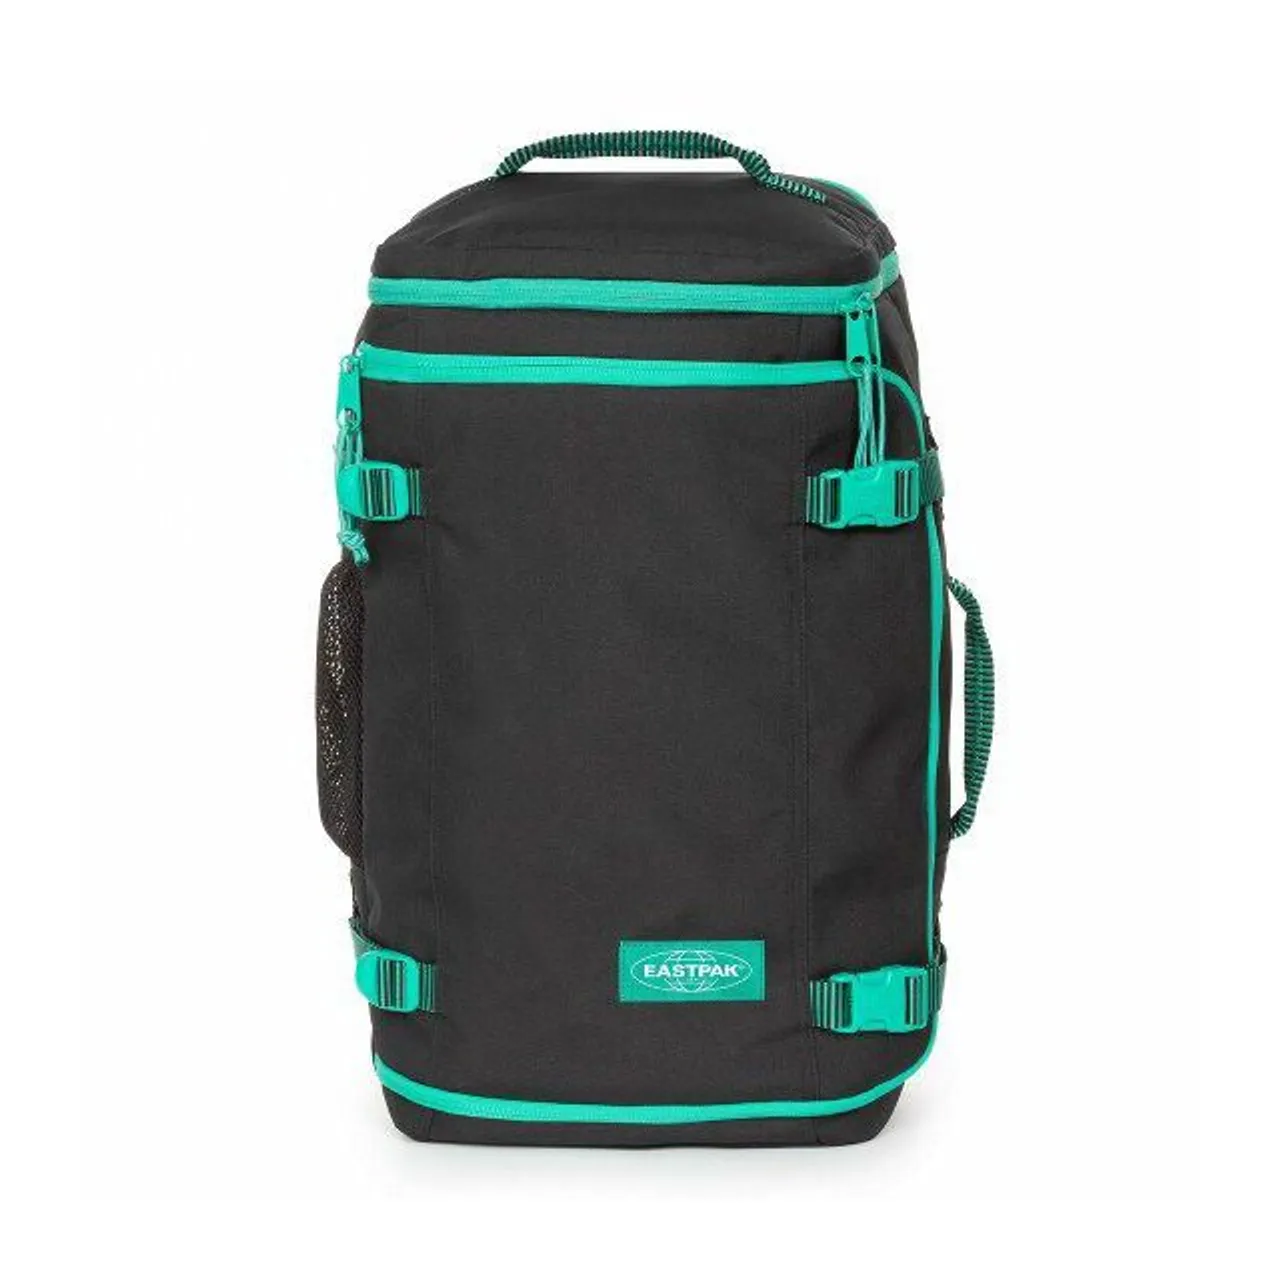 Eastpak Carry Pack Rucksack 53 cm Laptopfach kontrast stripe black